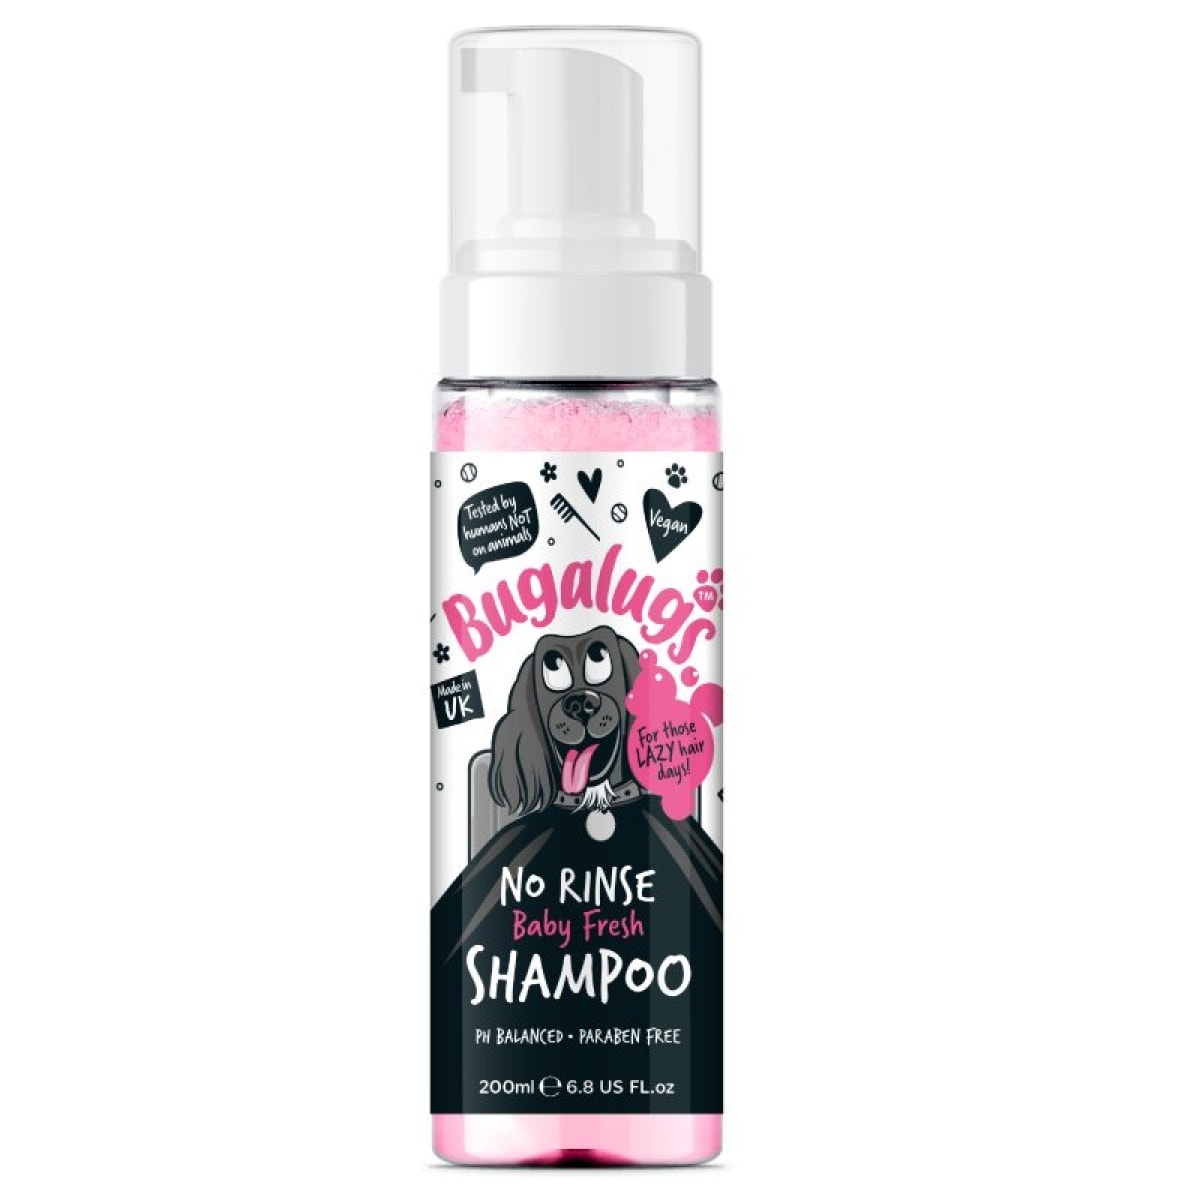 Bugalugs - No Rinse Baby Fresh Shampoo 200ml Main Image